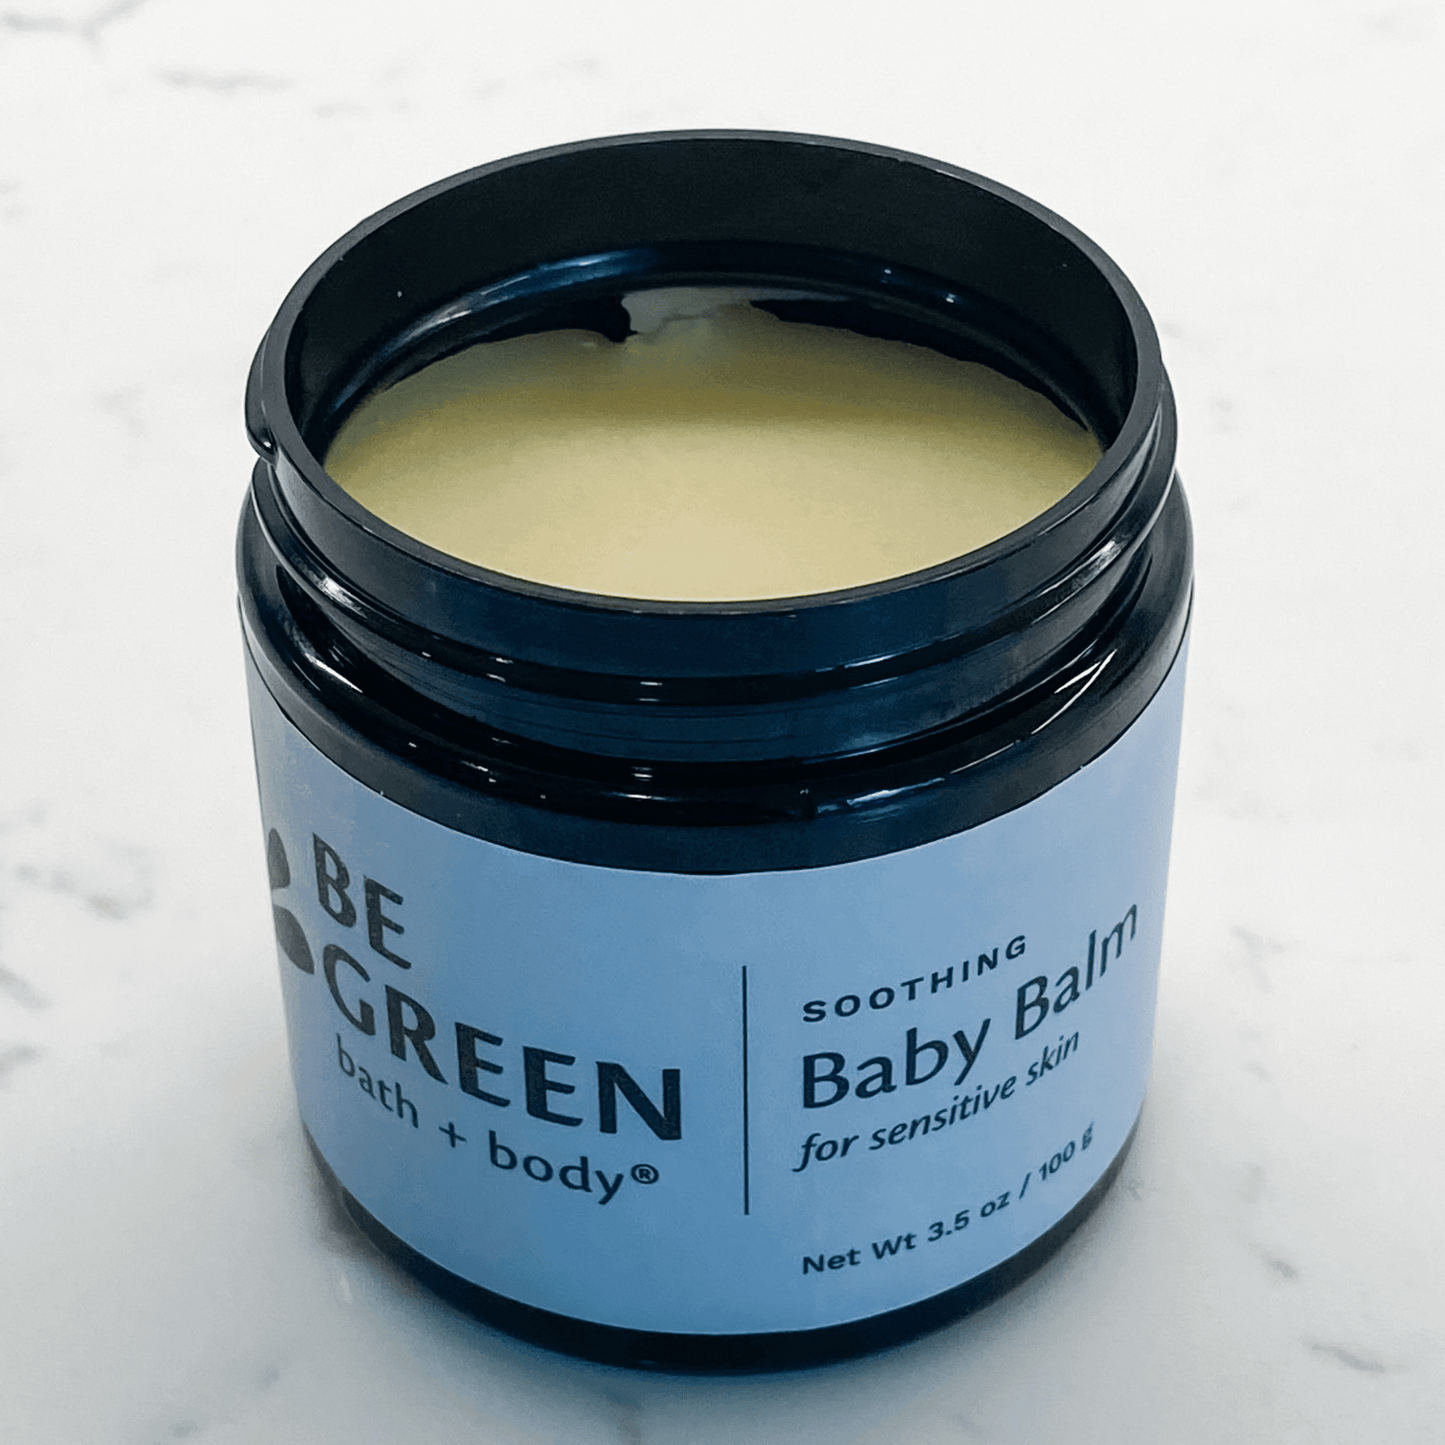 Be Green Bath and Body Baby &  Sensitive Skin Balm open jar